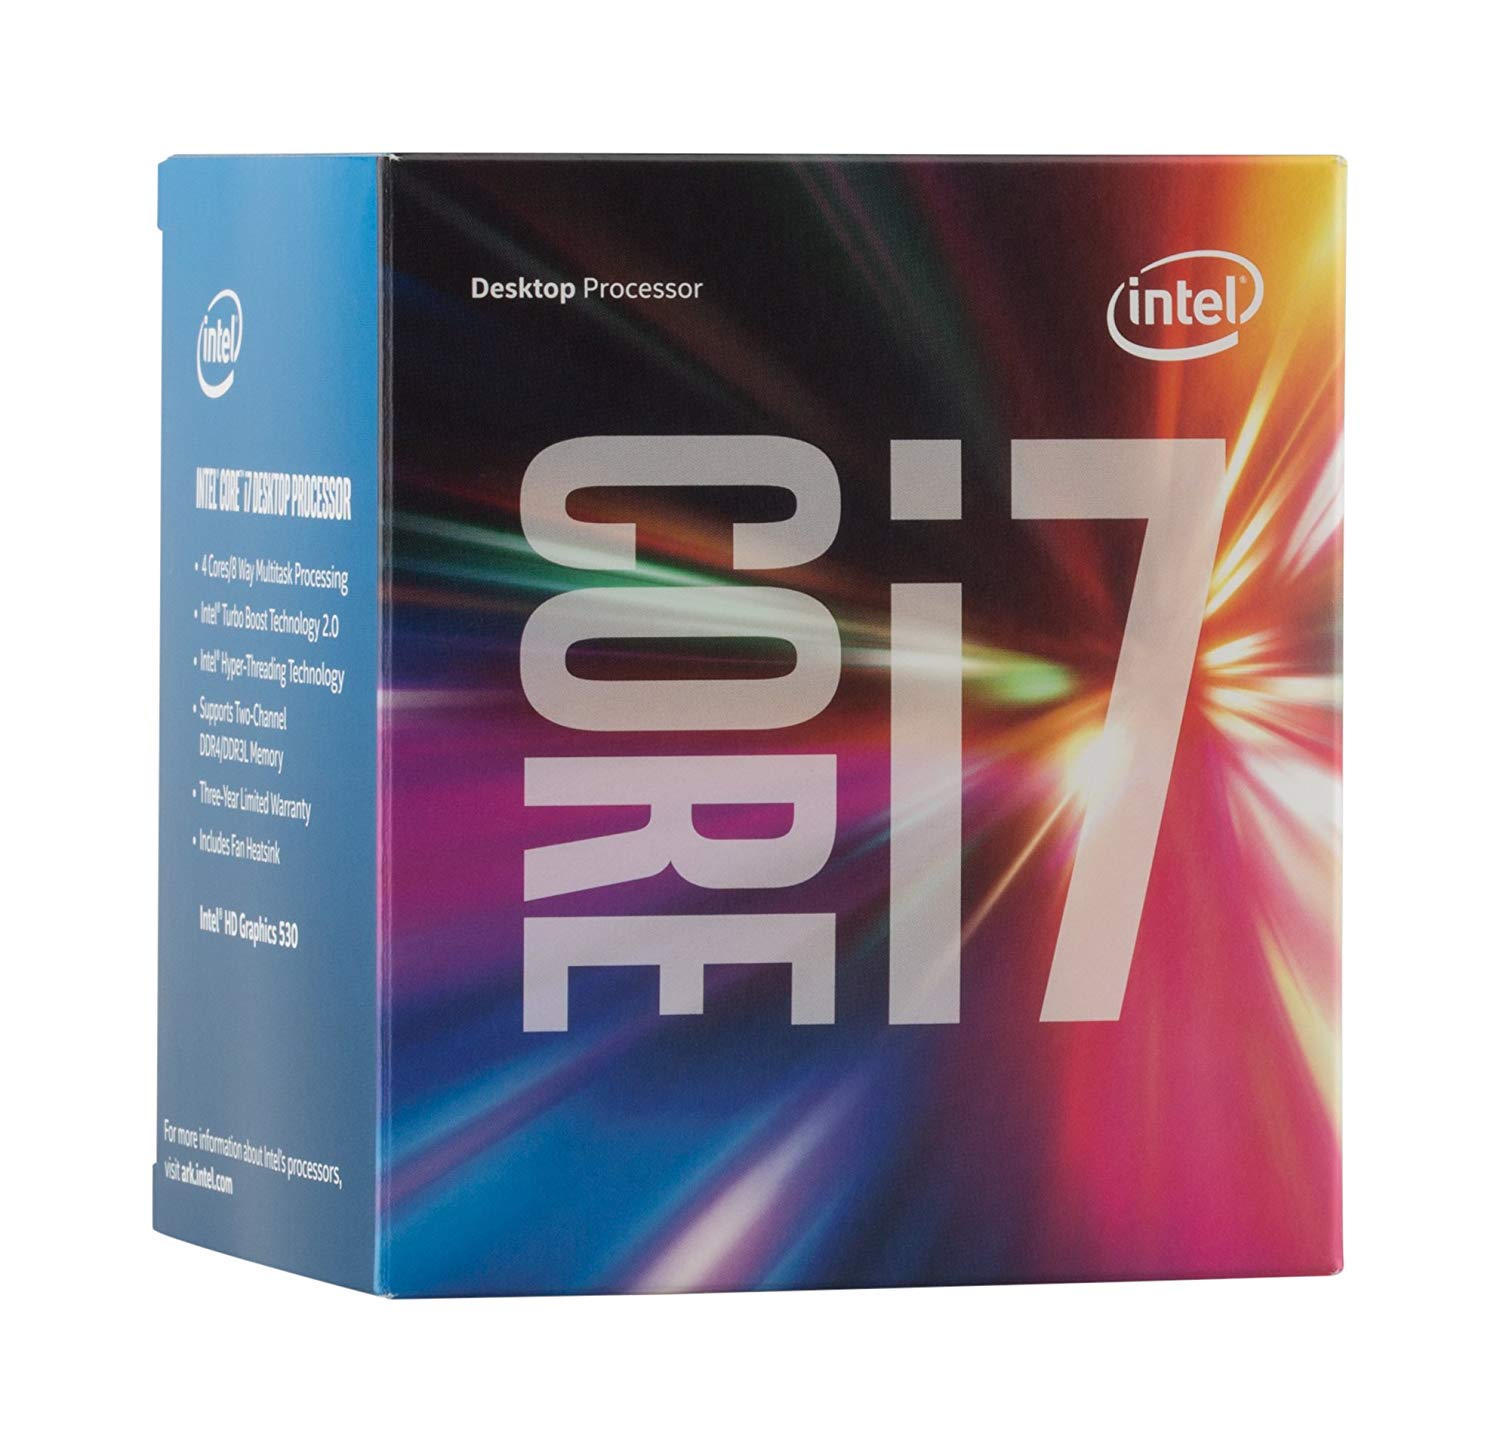 Intel Core i7-6700 8M 3.4 GHz Socket LGA 1151 65W QC HD Graphics 530 (SR2BT  / SR2L2) Desktop Processor including Cooling Fan - BX80662I76700